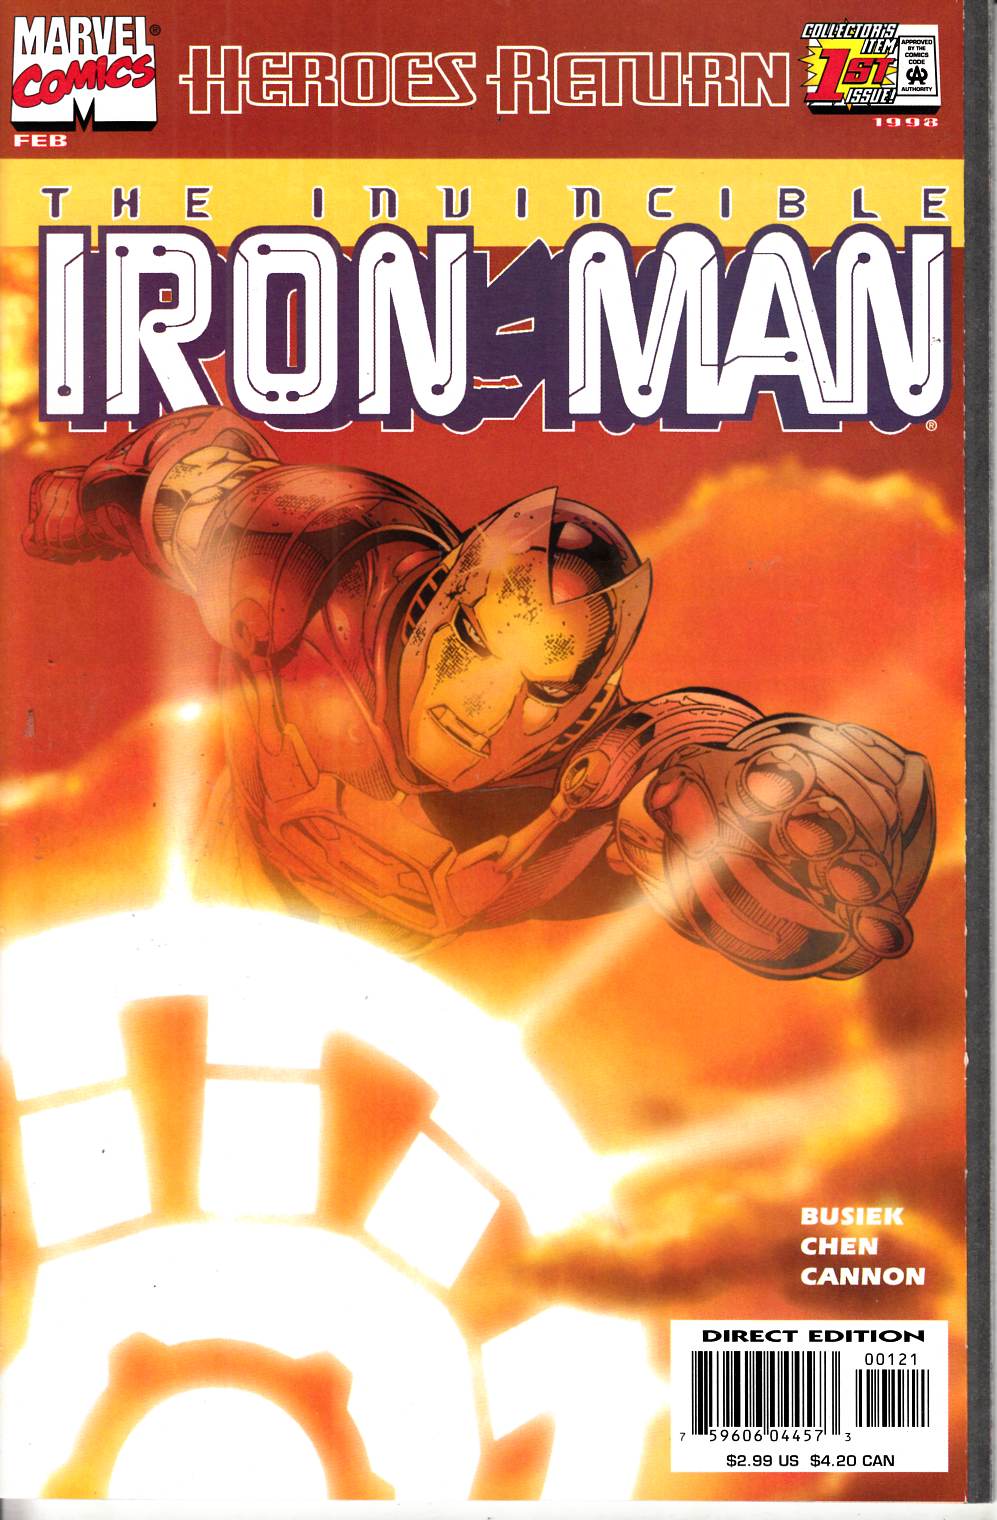 Iron Man #1 Sunburst Variant Cover Very Fine (8.0) [Marvel Comic] LARGE